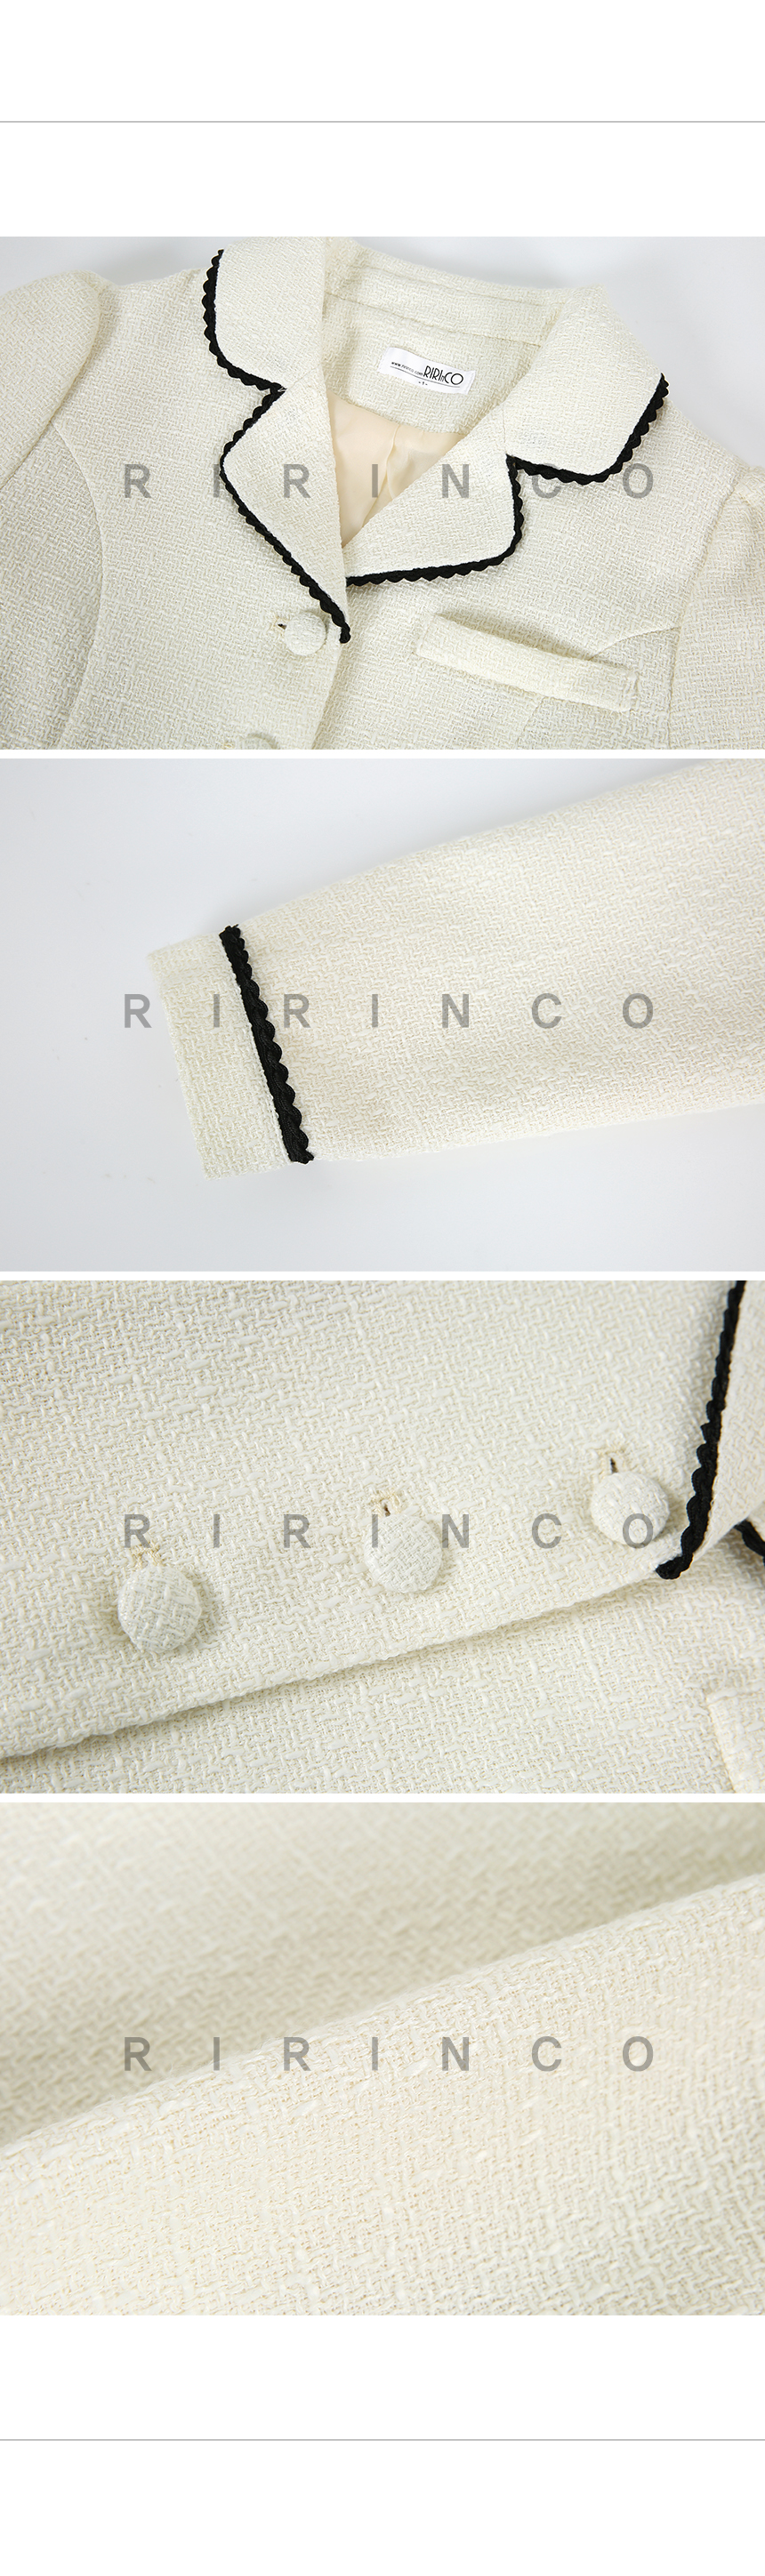 RIRINCO ツイードパフクロップドツーピースジャケット